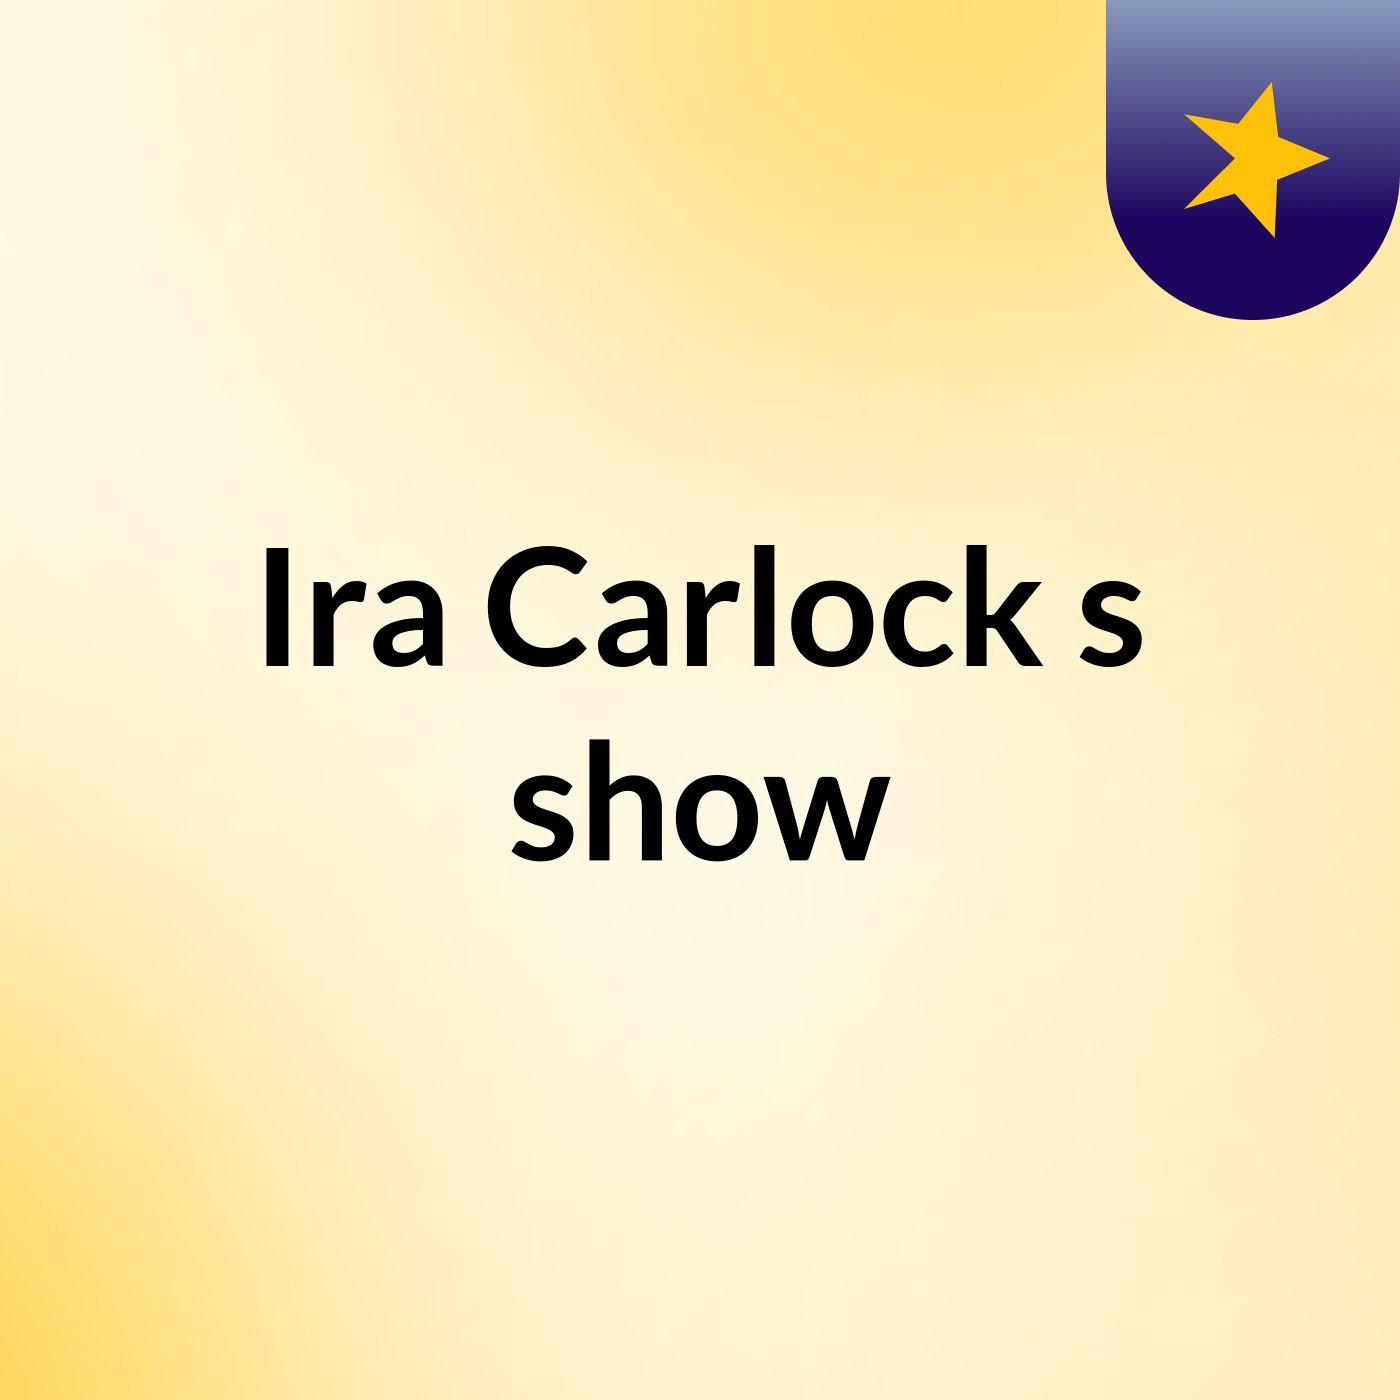 Ira Carlock's show